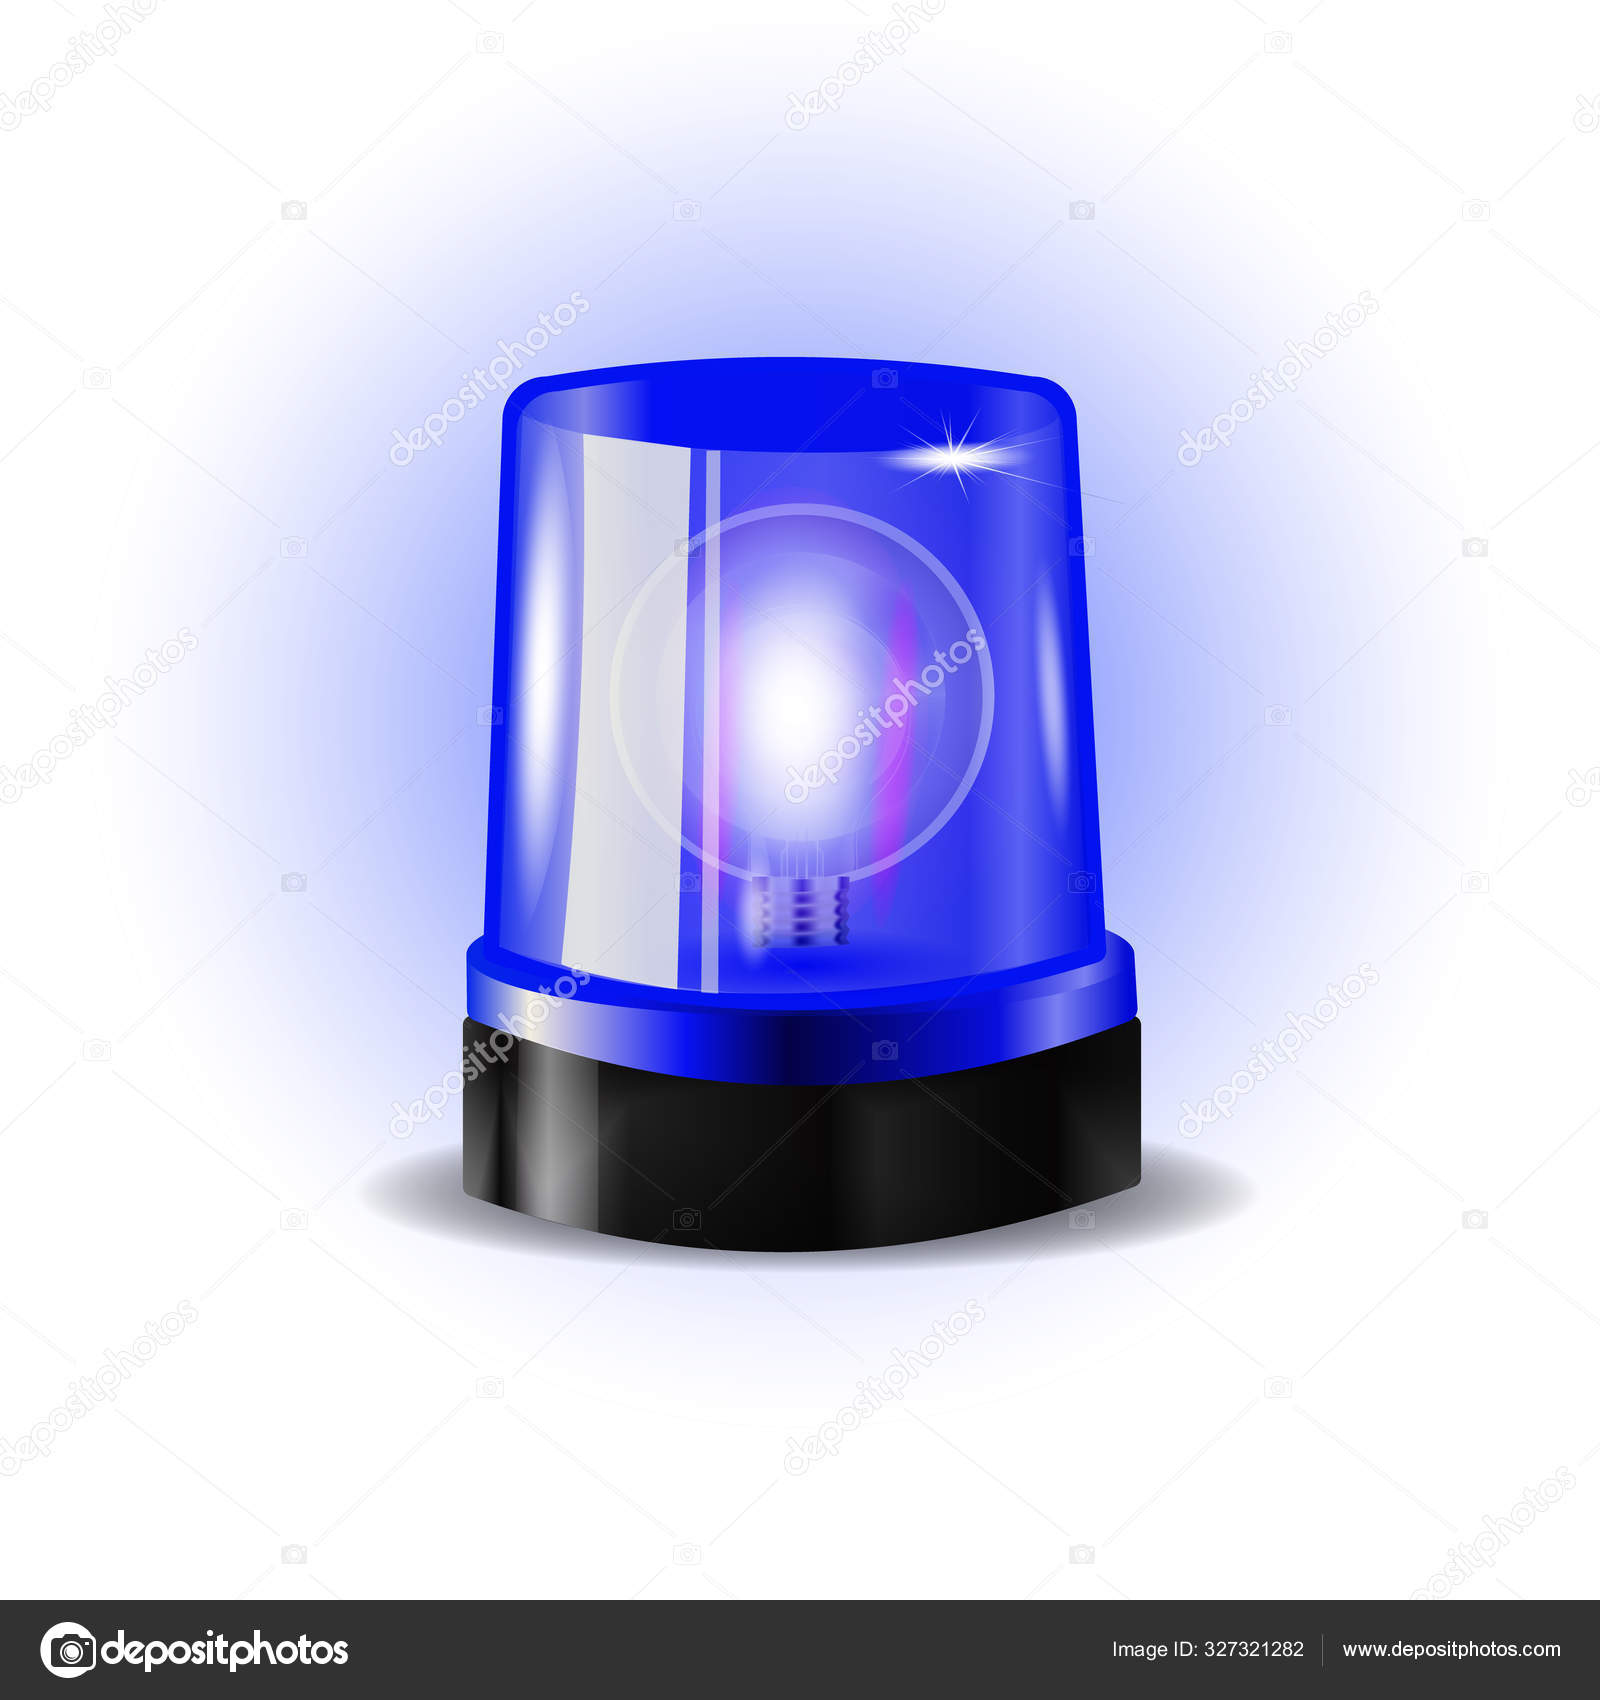 https://st3.depositphotos.com/6230340/32732/v/1600/depositphotos_327321282-stock-illustration-blue-flashers-siren-vector-realistic.jpg